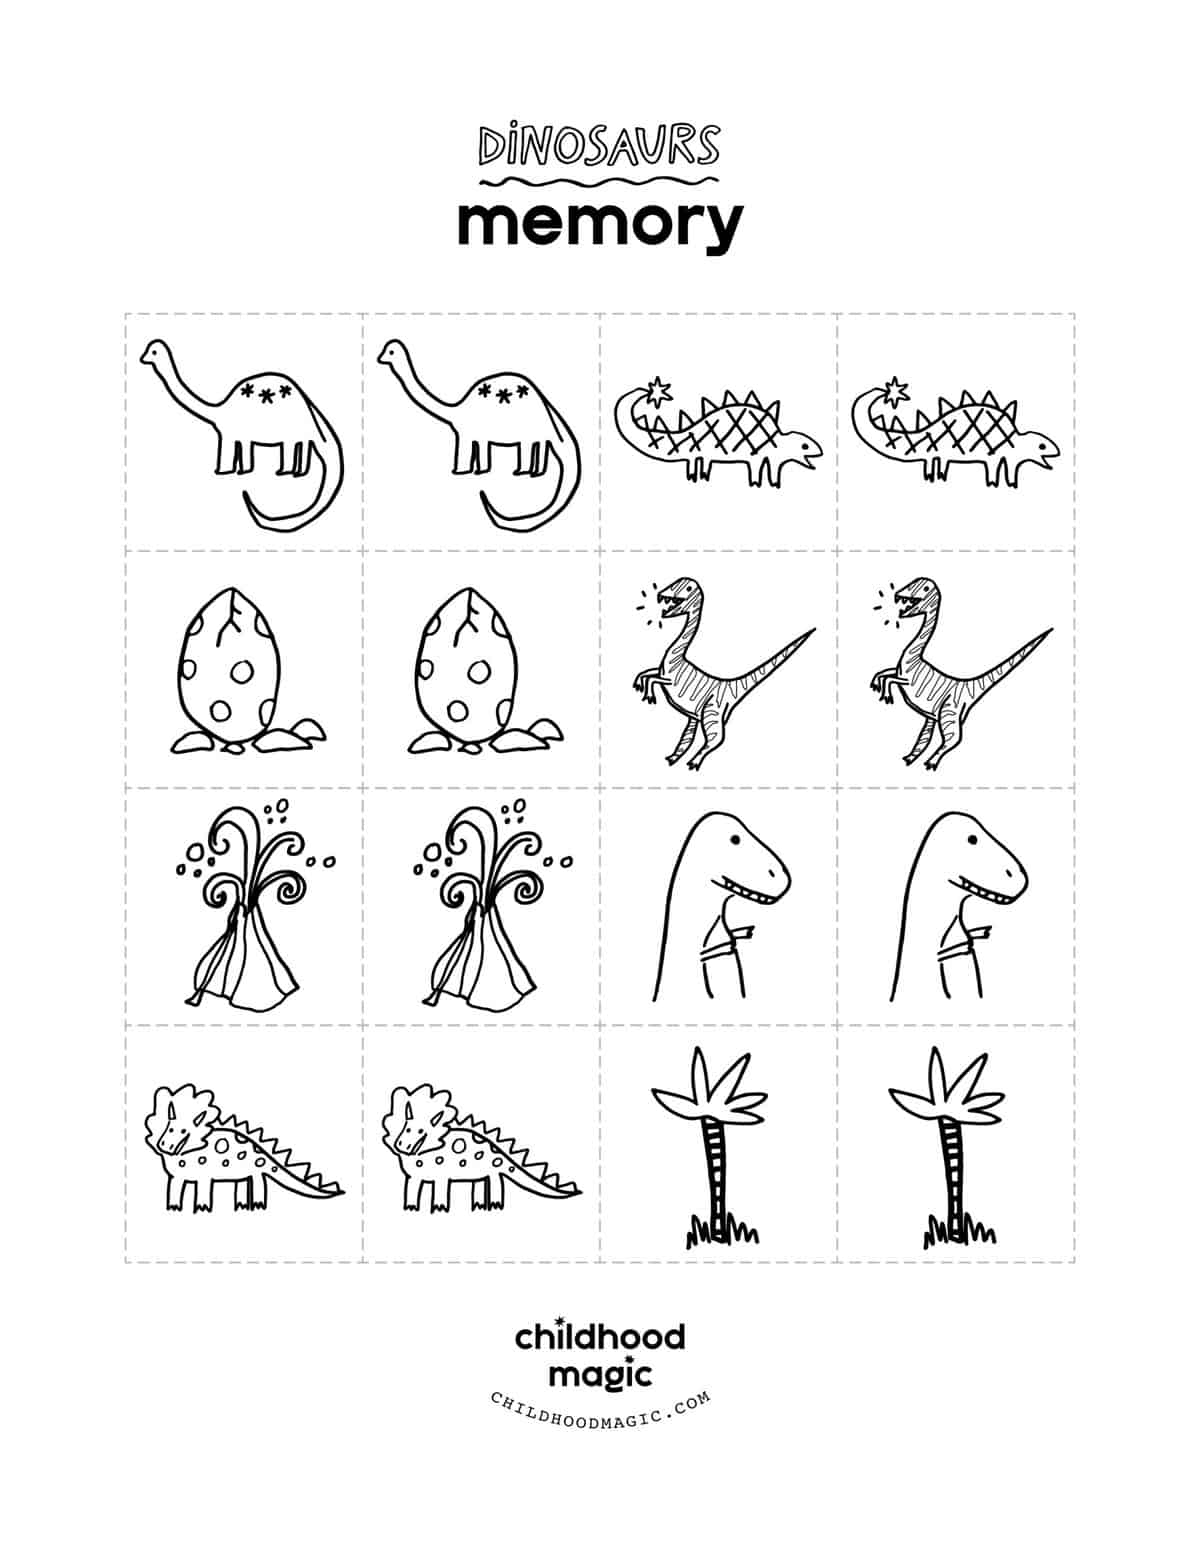 Dinosaur memory game